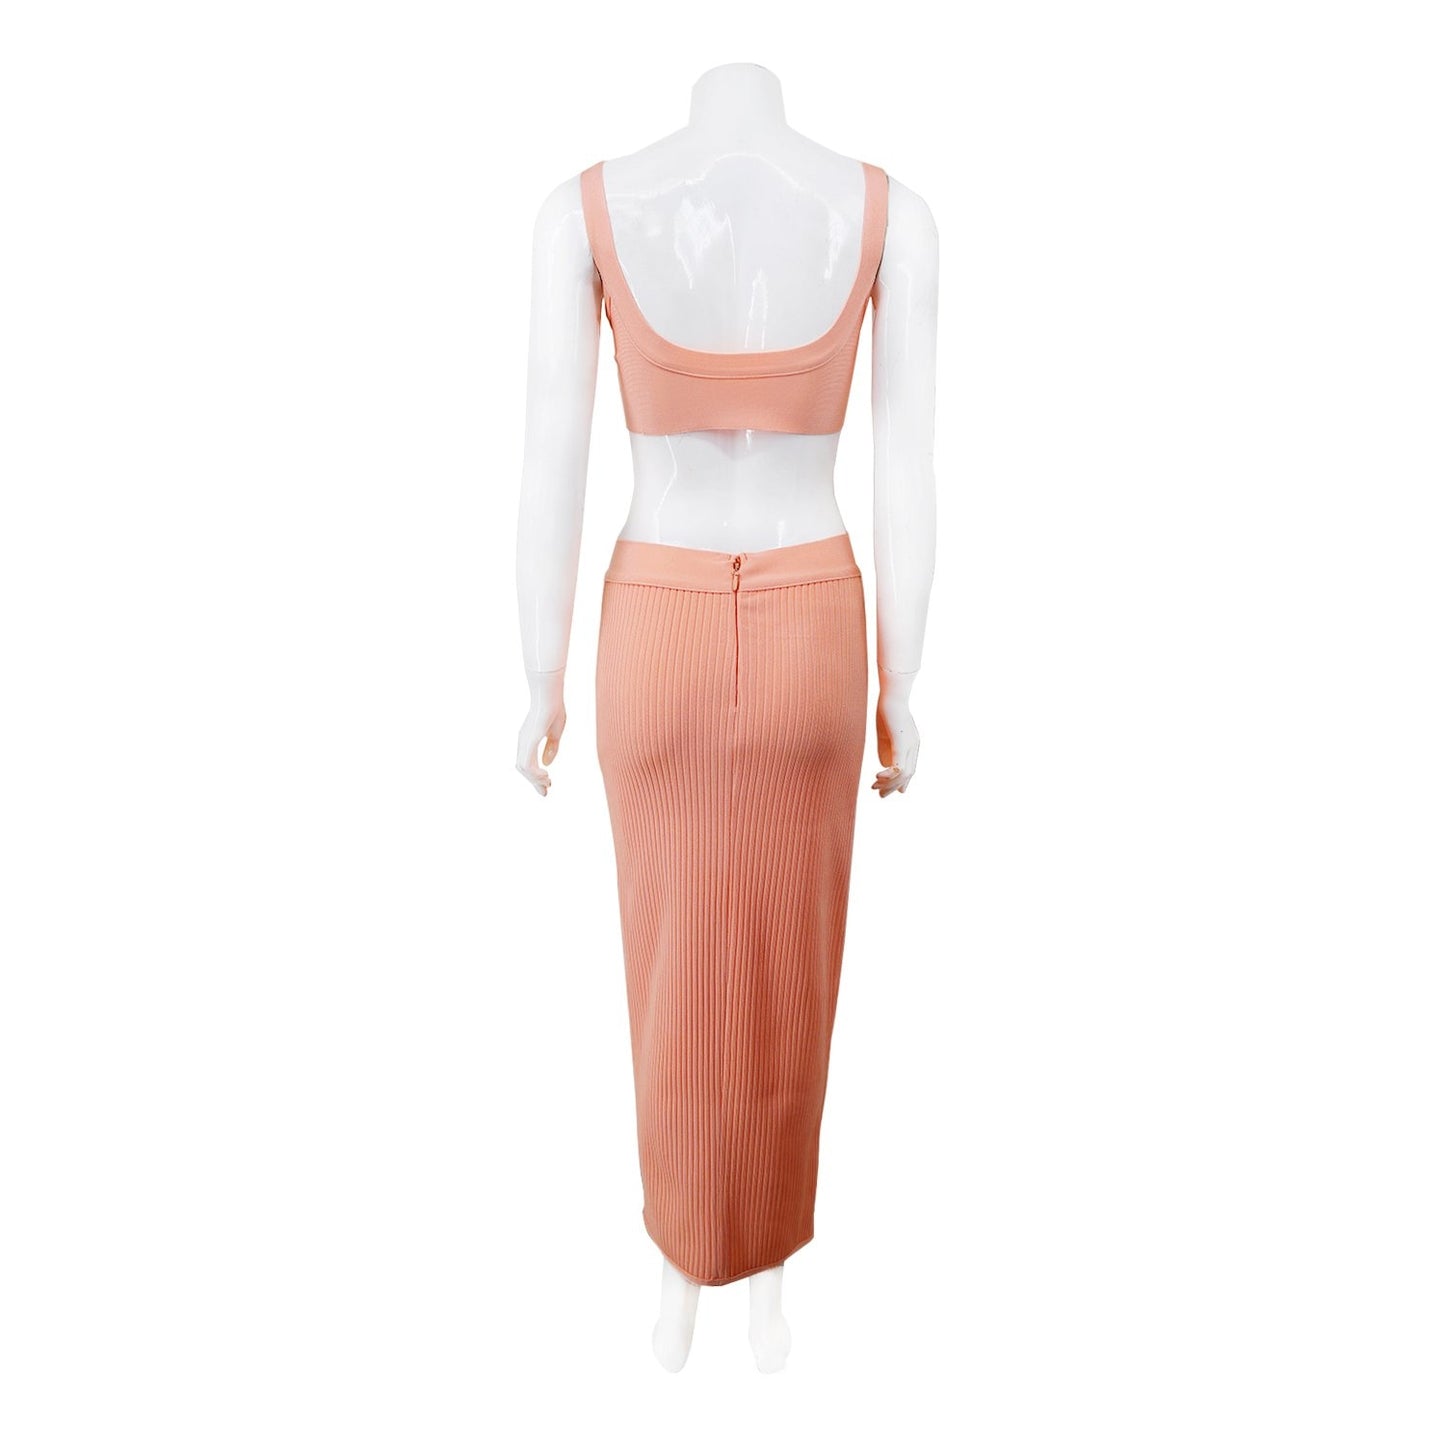 Winnal Women’s Sexy 2 Piece Outfits Strap Crop Top Skirt Set Bodycon Mini Dress